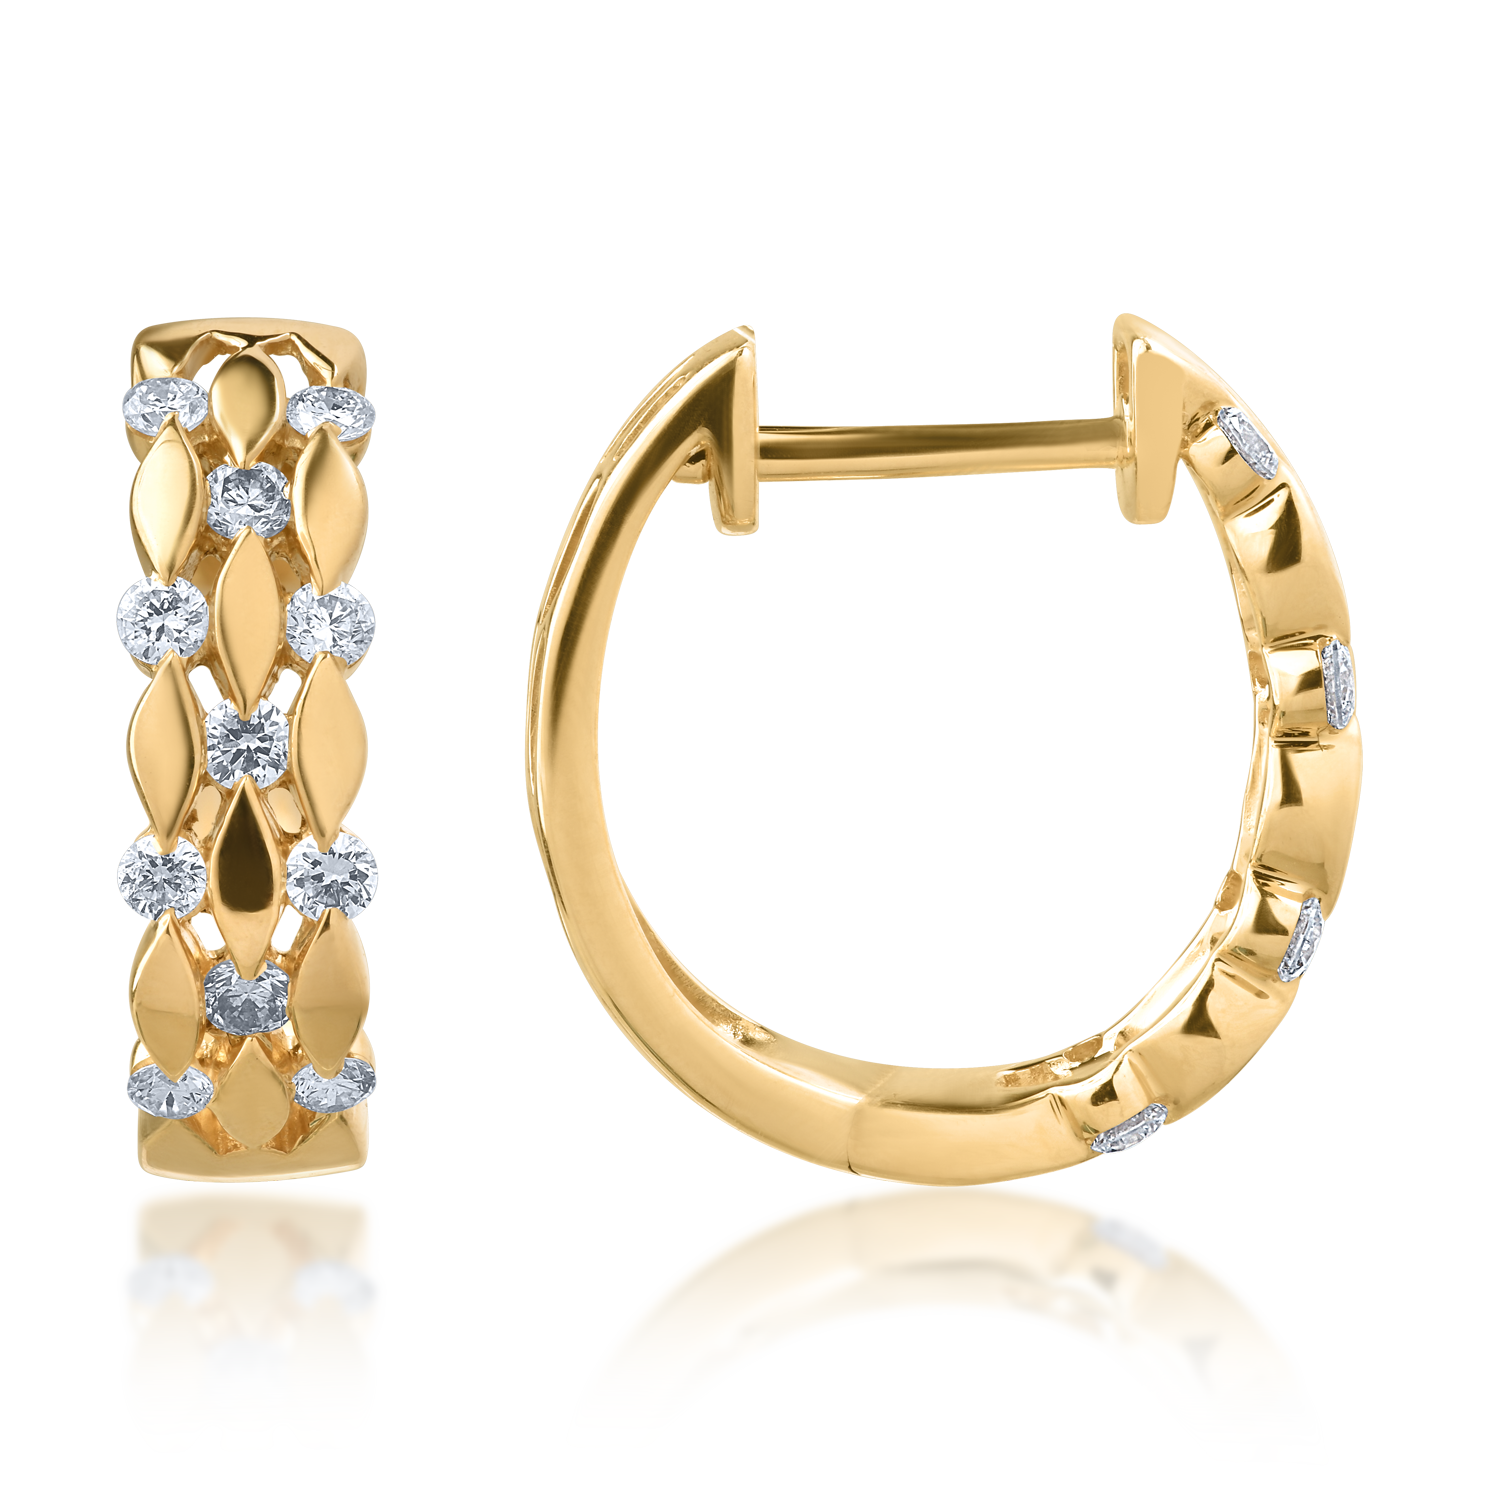 18K yellow gold earrings with 0.32ct diamonds